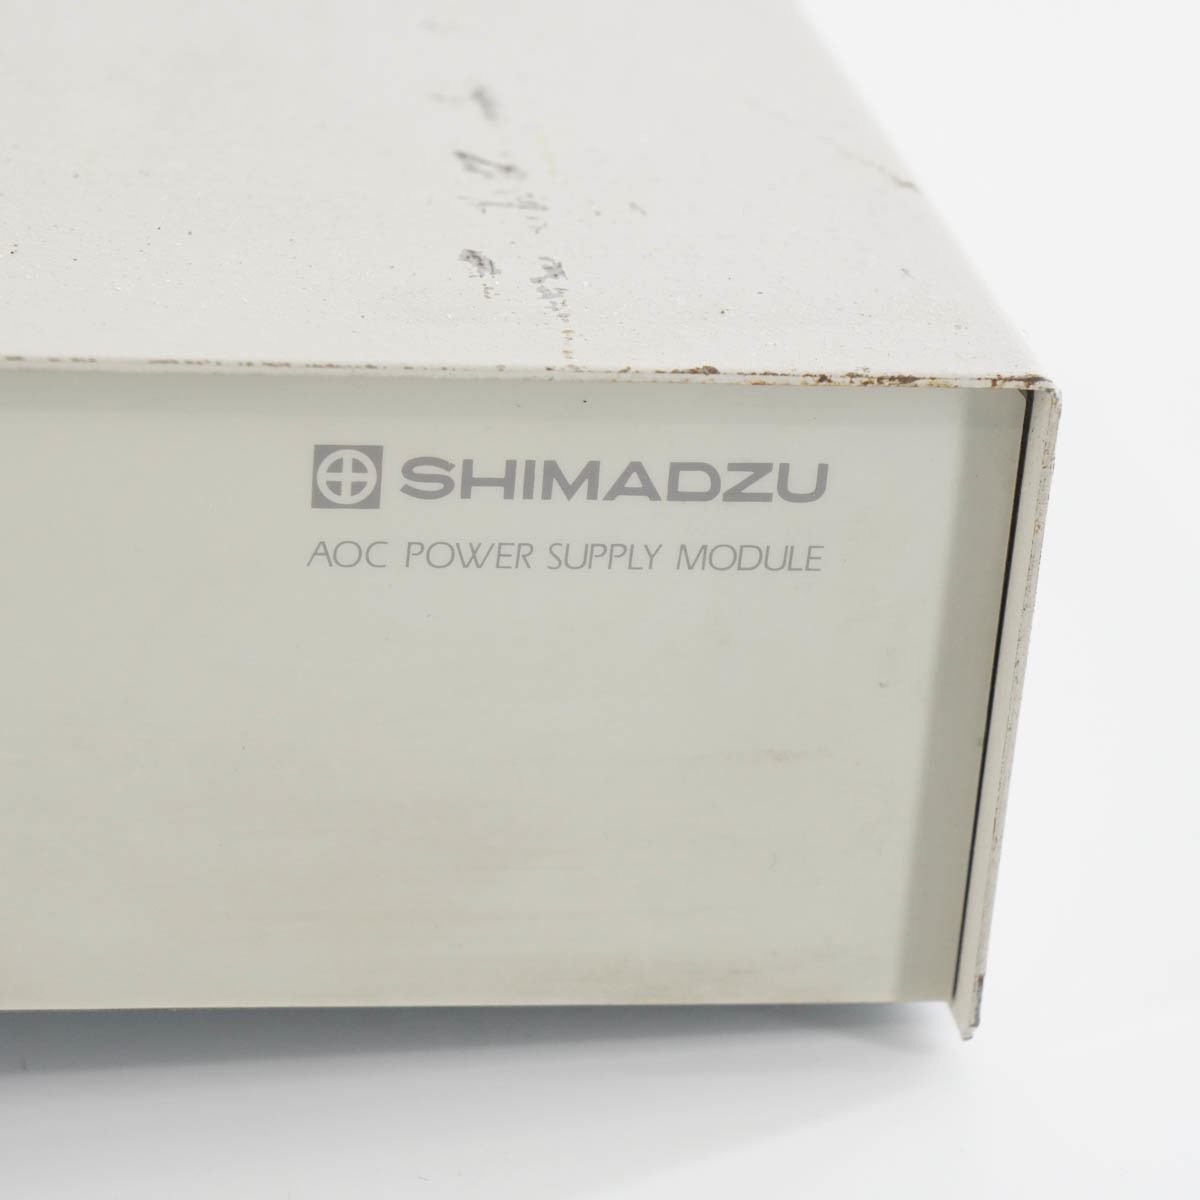 [DW] 8日保証 221-44990-91 SHIMADZU 島津製作所 AOC POWER SUPPLY MODULE 電源モジュール パワーサプライ[05342-0045]_画像5